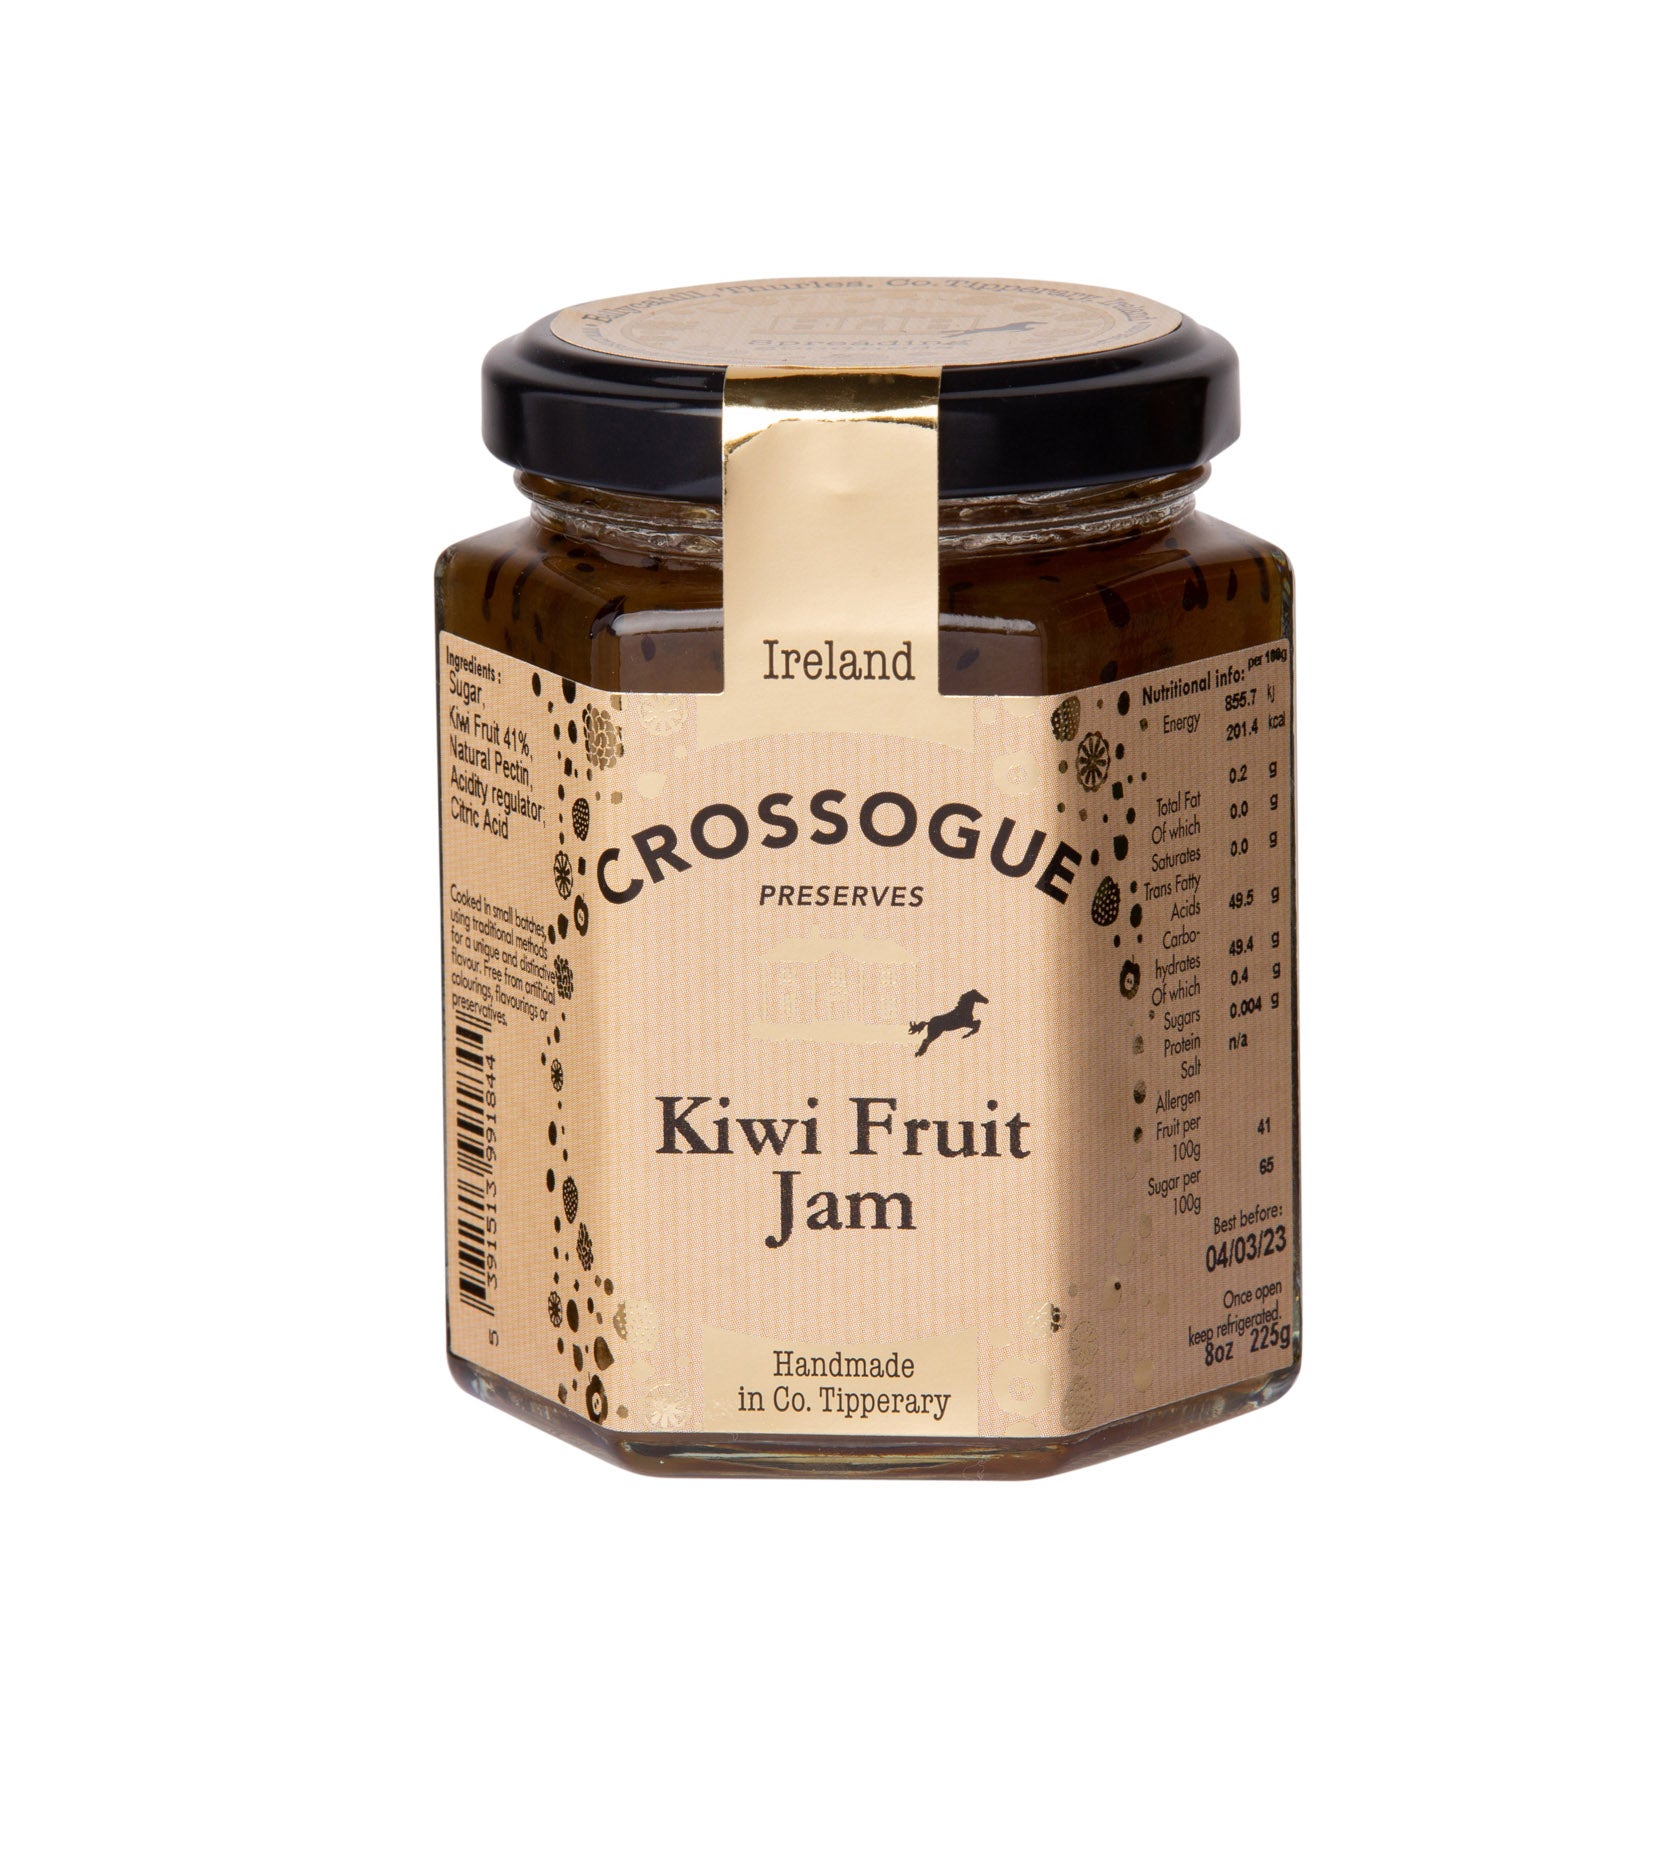 Kiwi Fruit Jam